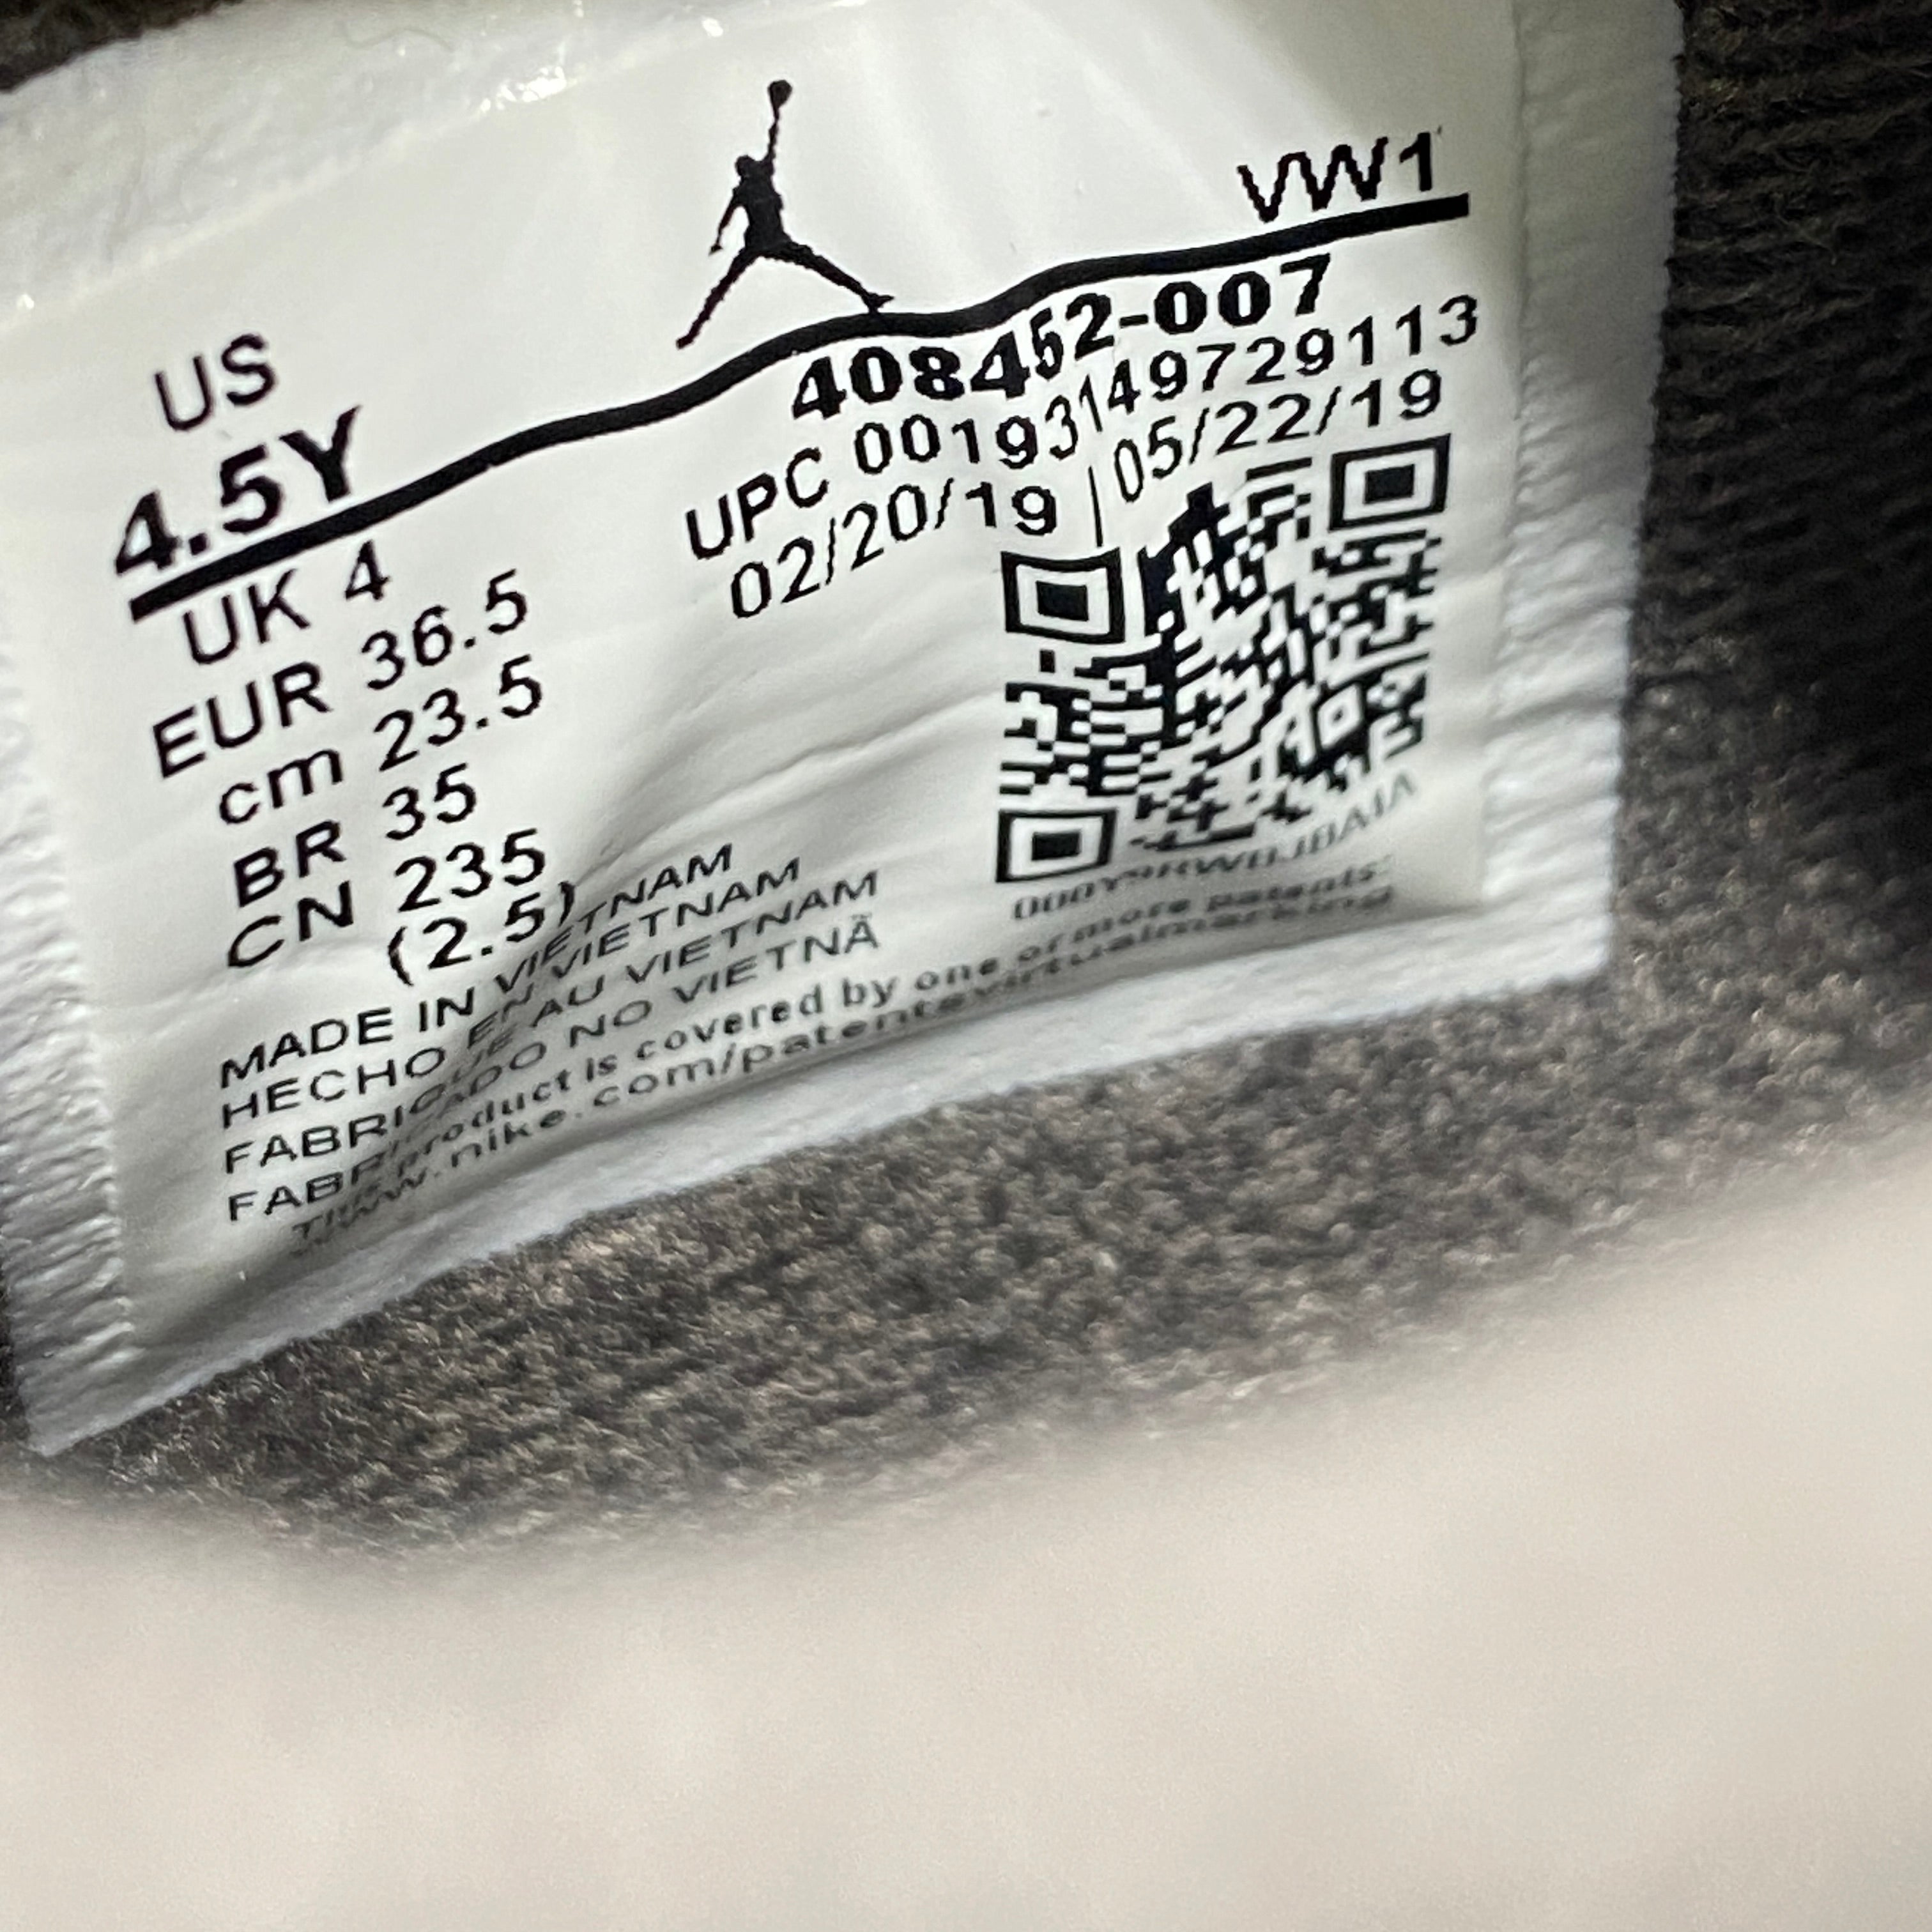 Air Jordan (GS) 4 Retro "Cool Grey" 2019 Used Size 4.5Y